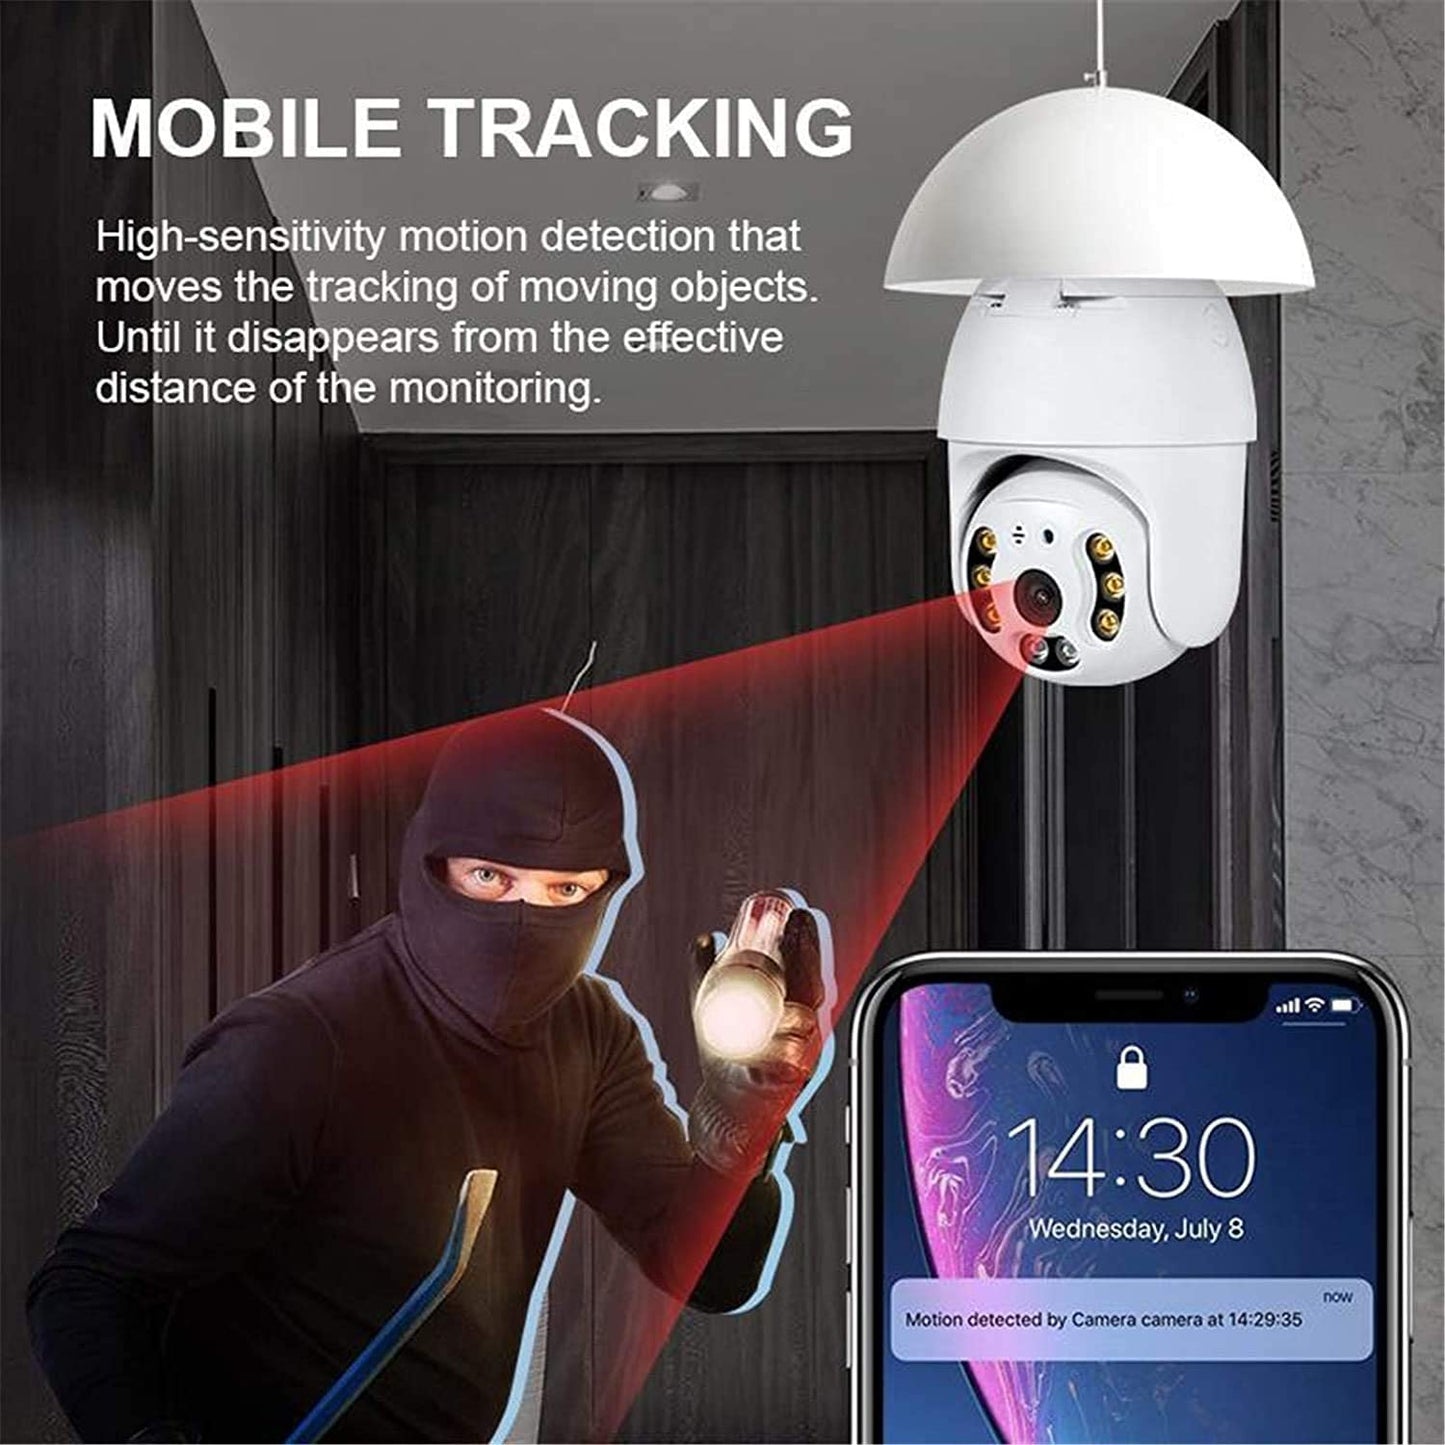 Tuya WiFi Bulb Camera 3MP PTZ Security Camera Lamp-Full Light Night Vision two Way Talk Auto Tracking CCTV Video Surveillanc